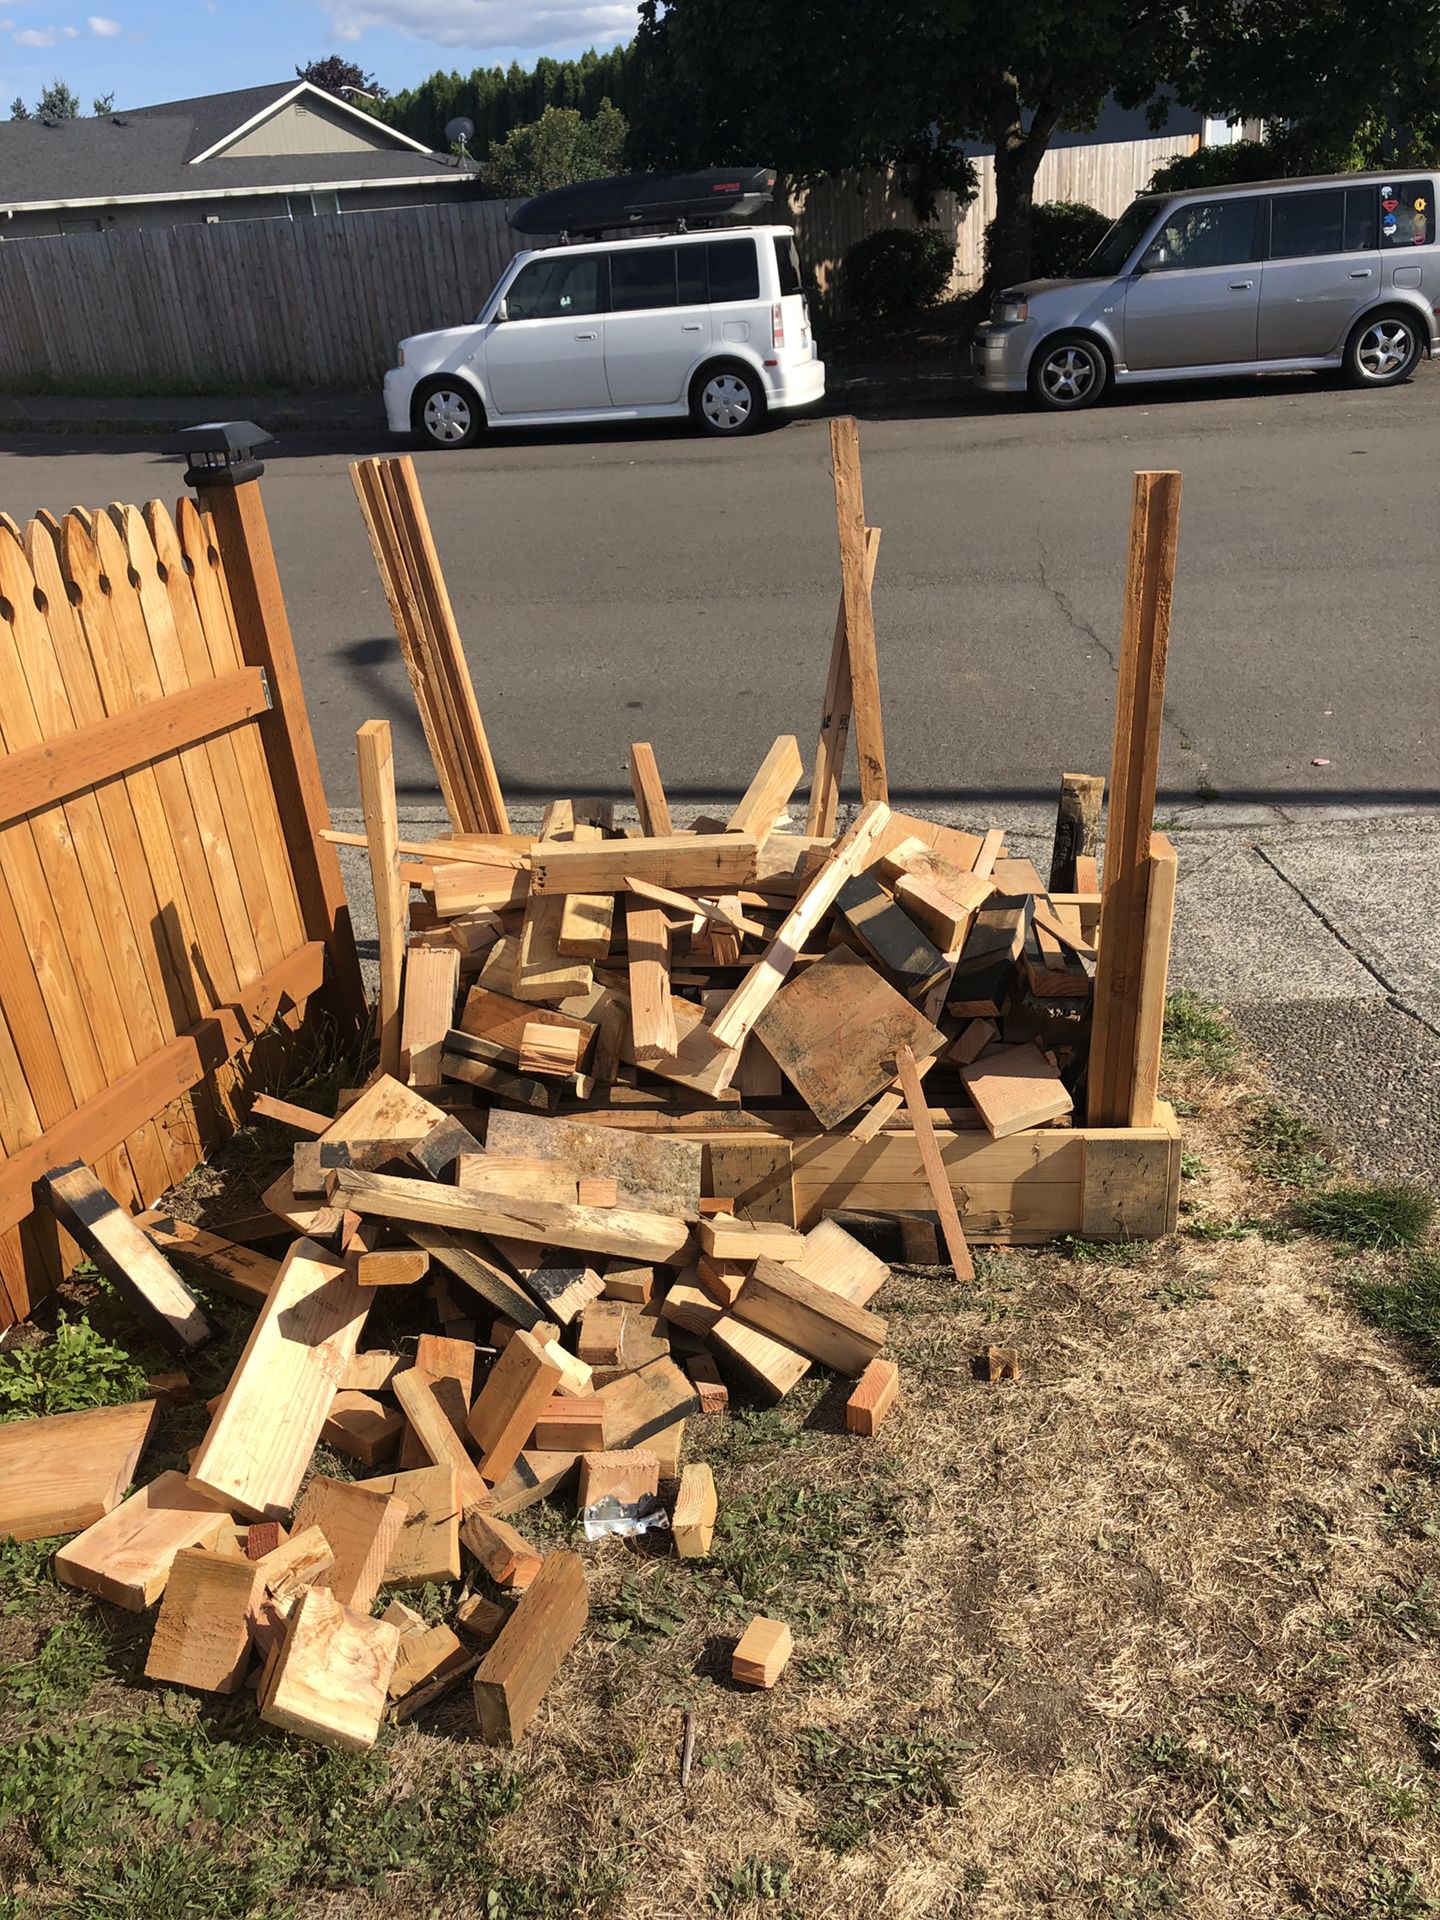 Free wood scraps